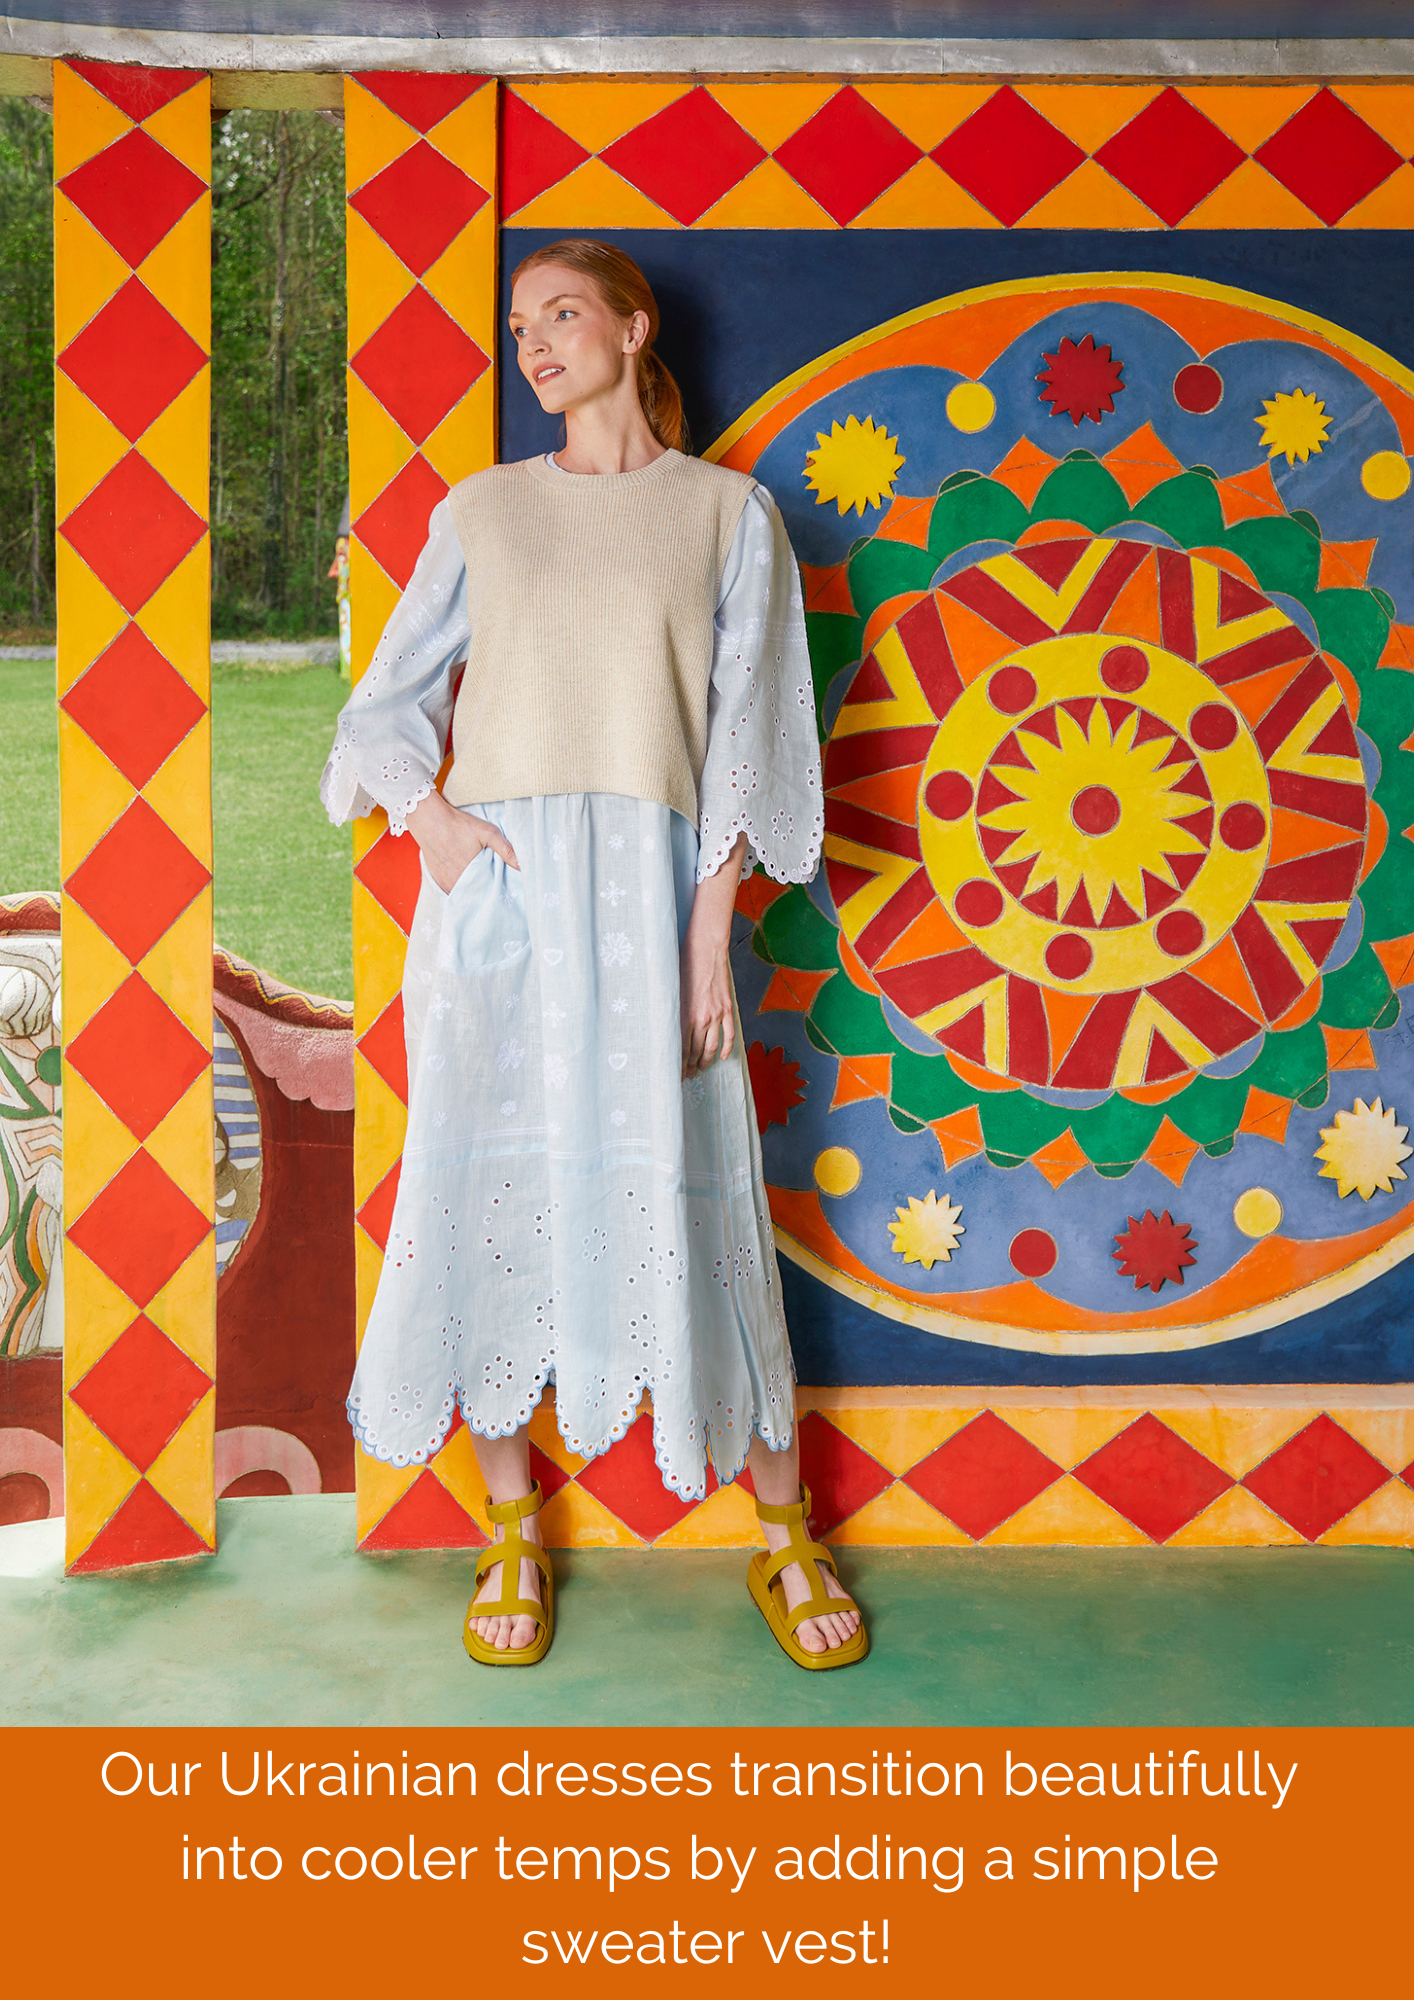 Maryna Embroidered Ukrainian Dress - Light Blue, White by Larkin Lane